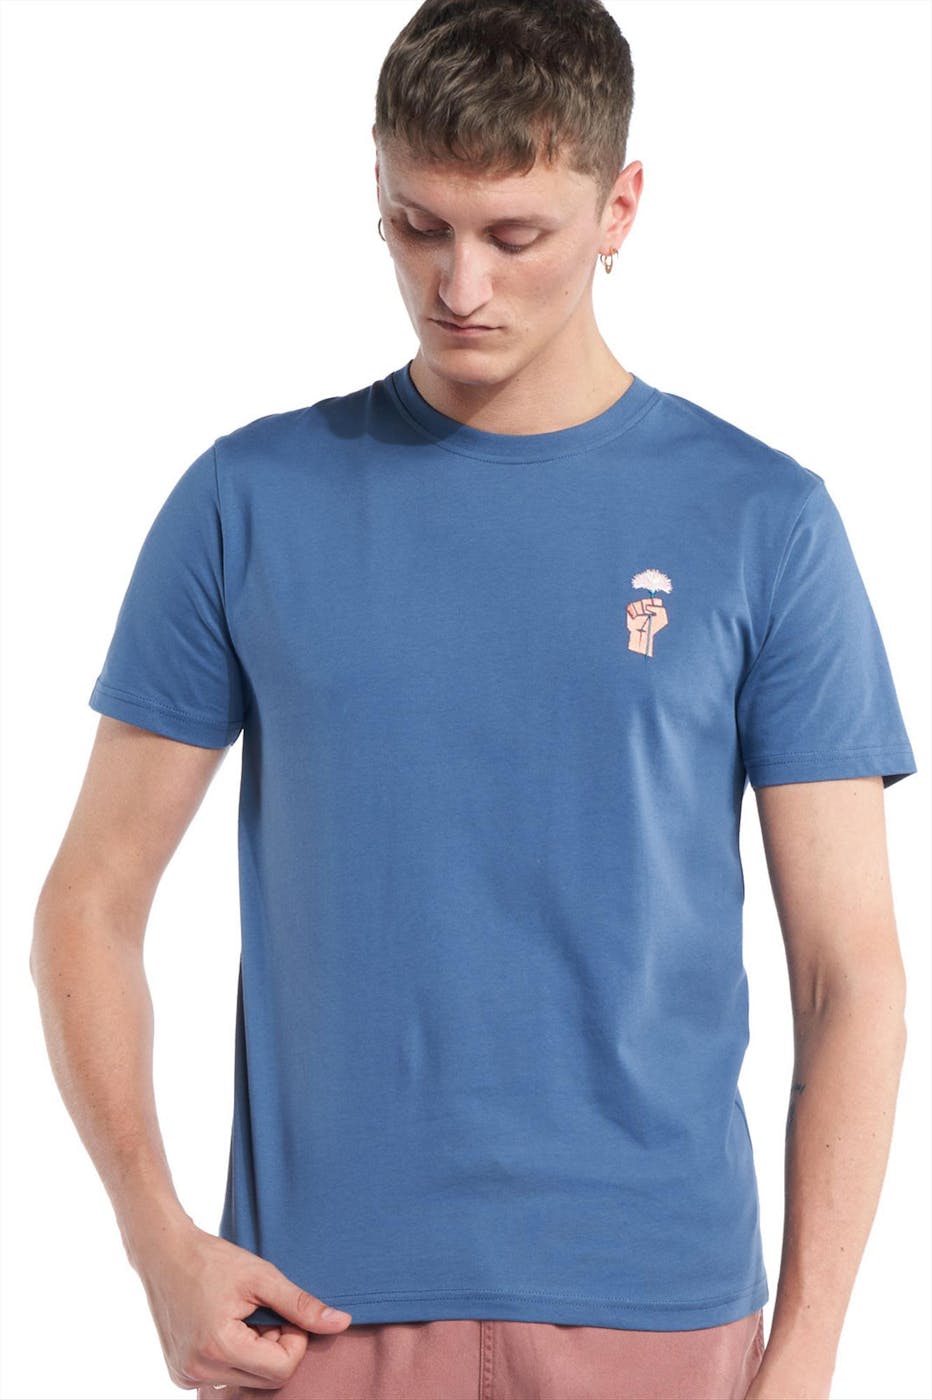 OLOW - Blauwe Flower Power T-shirt